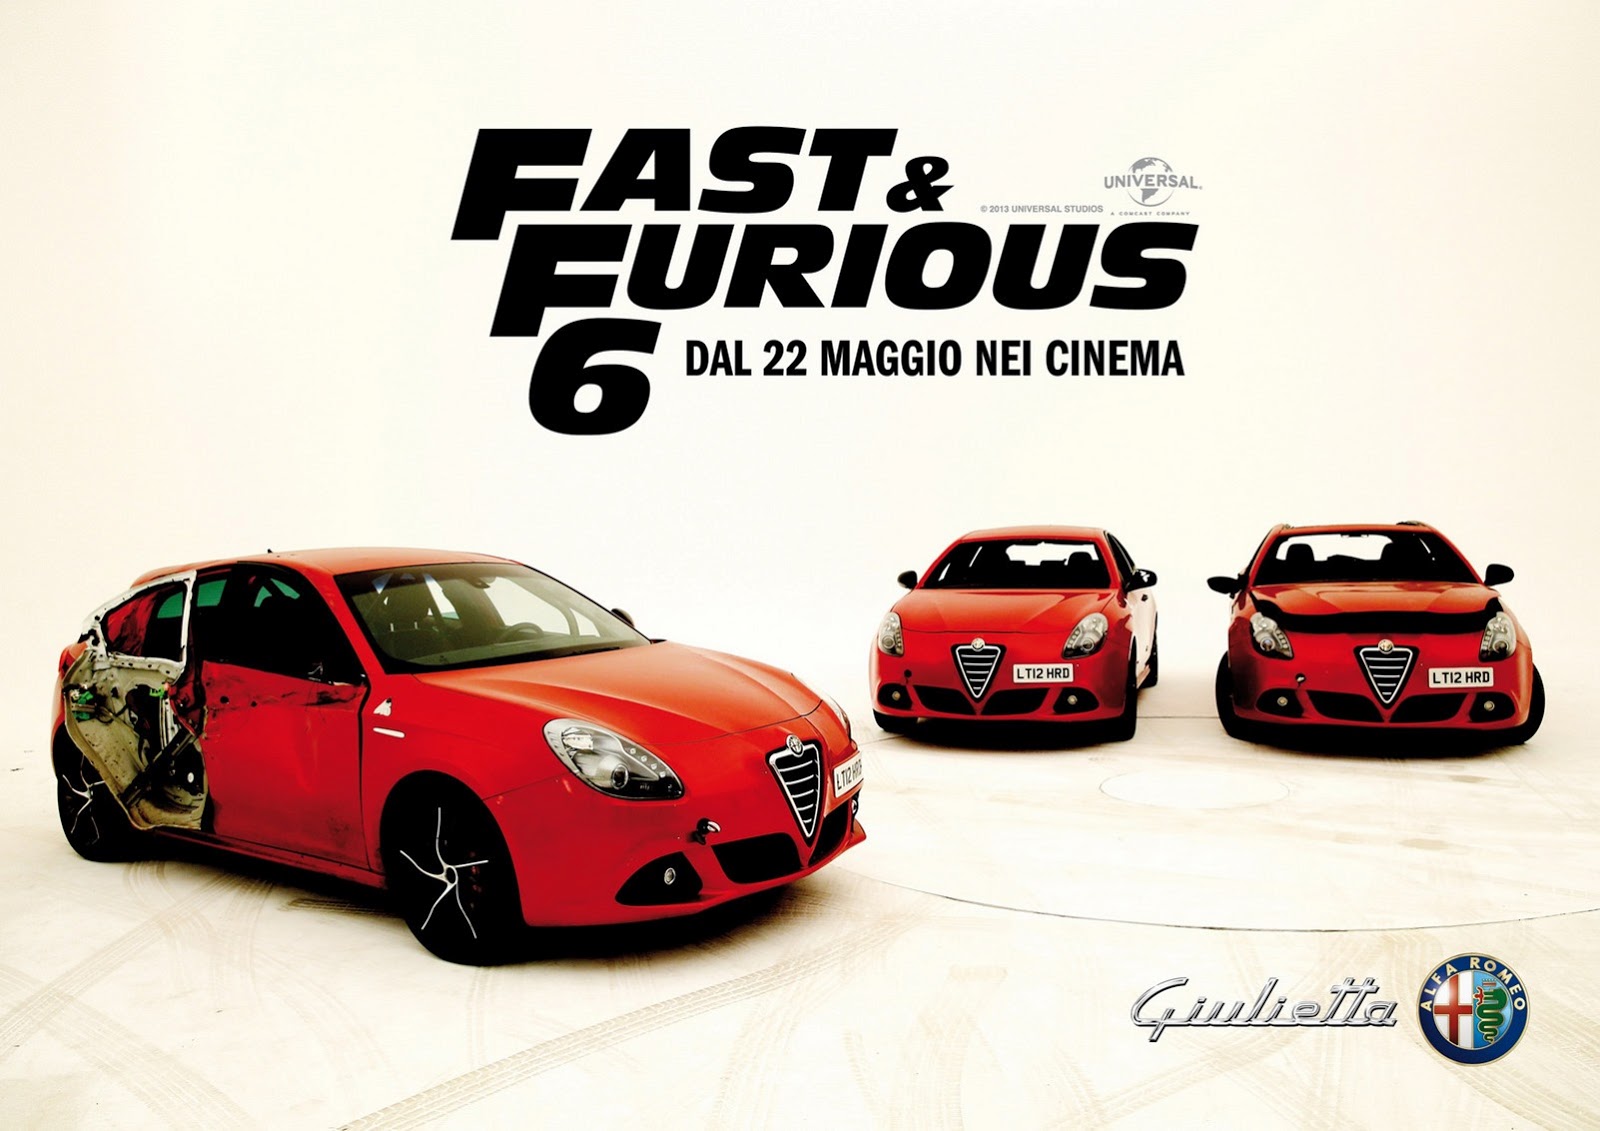 Alfa Giullietta Fastand Furious 12